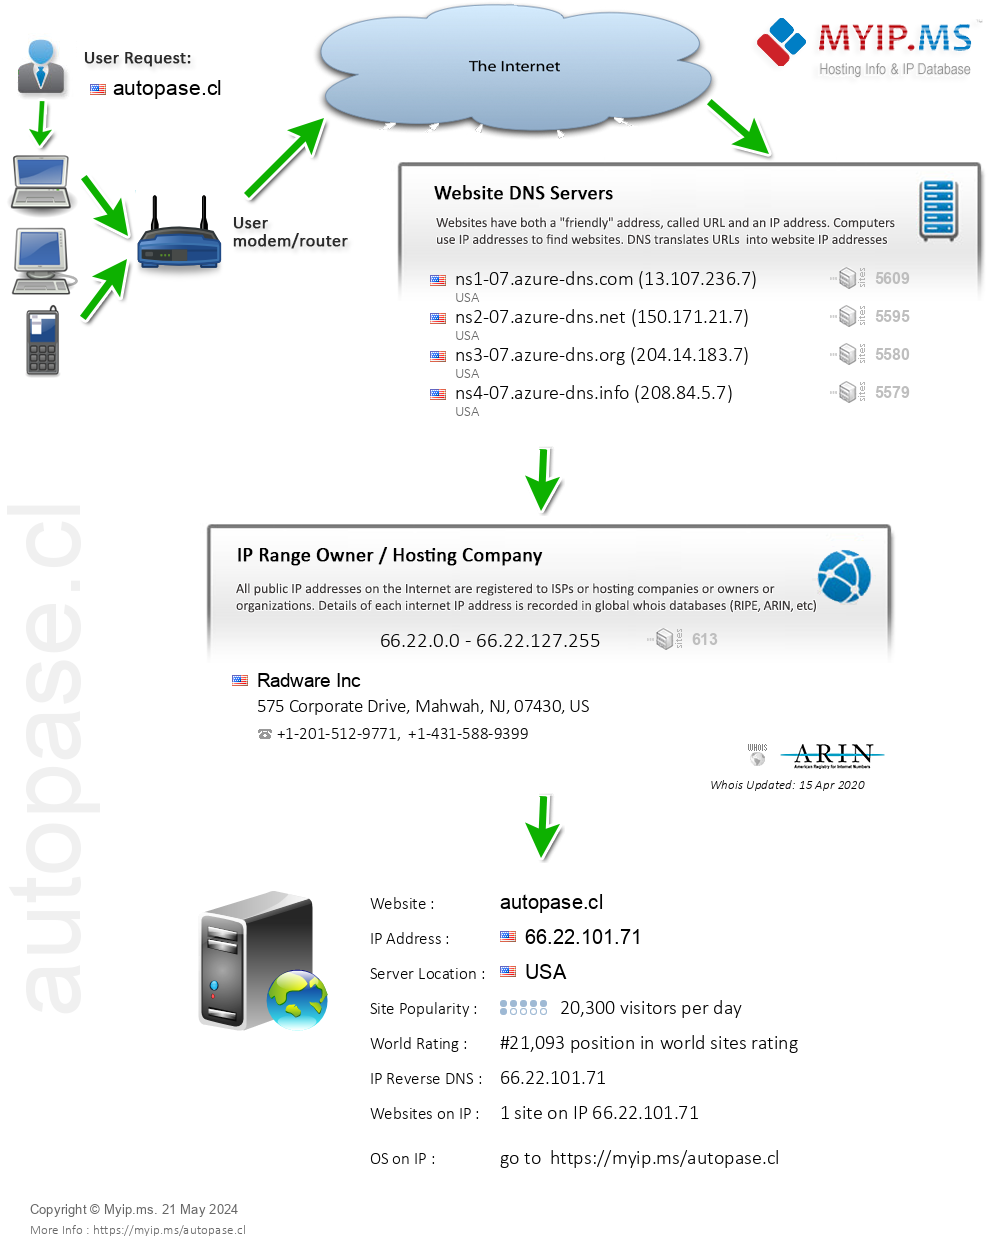 Autopase.cl - Website Hosting Visual IP Diagram